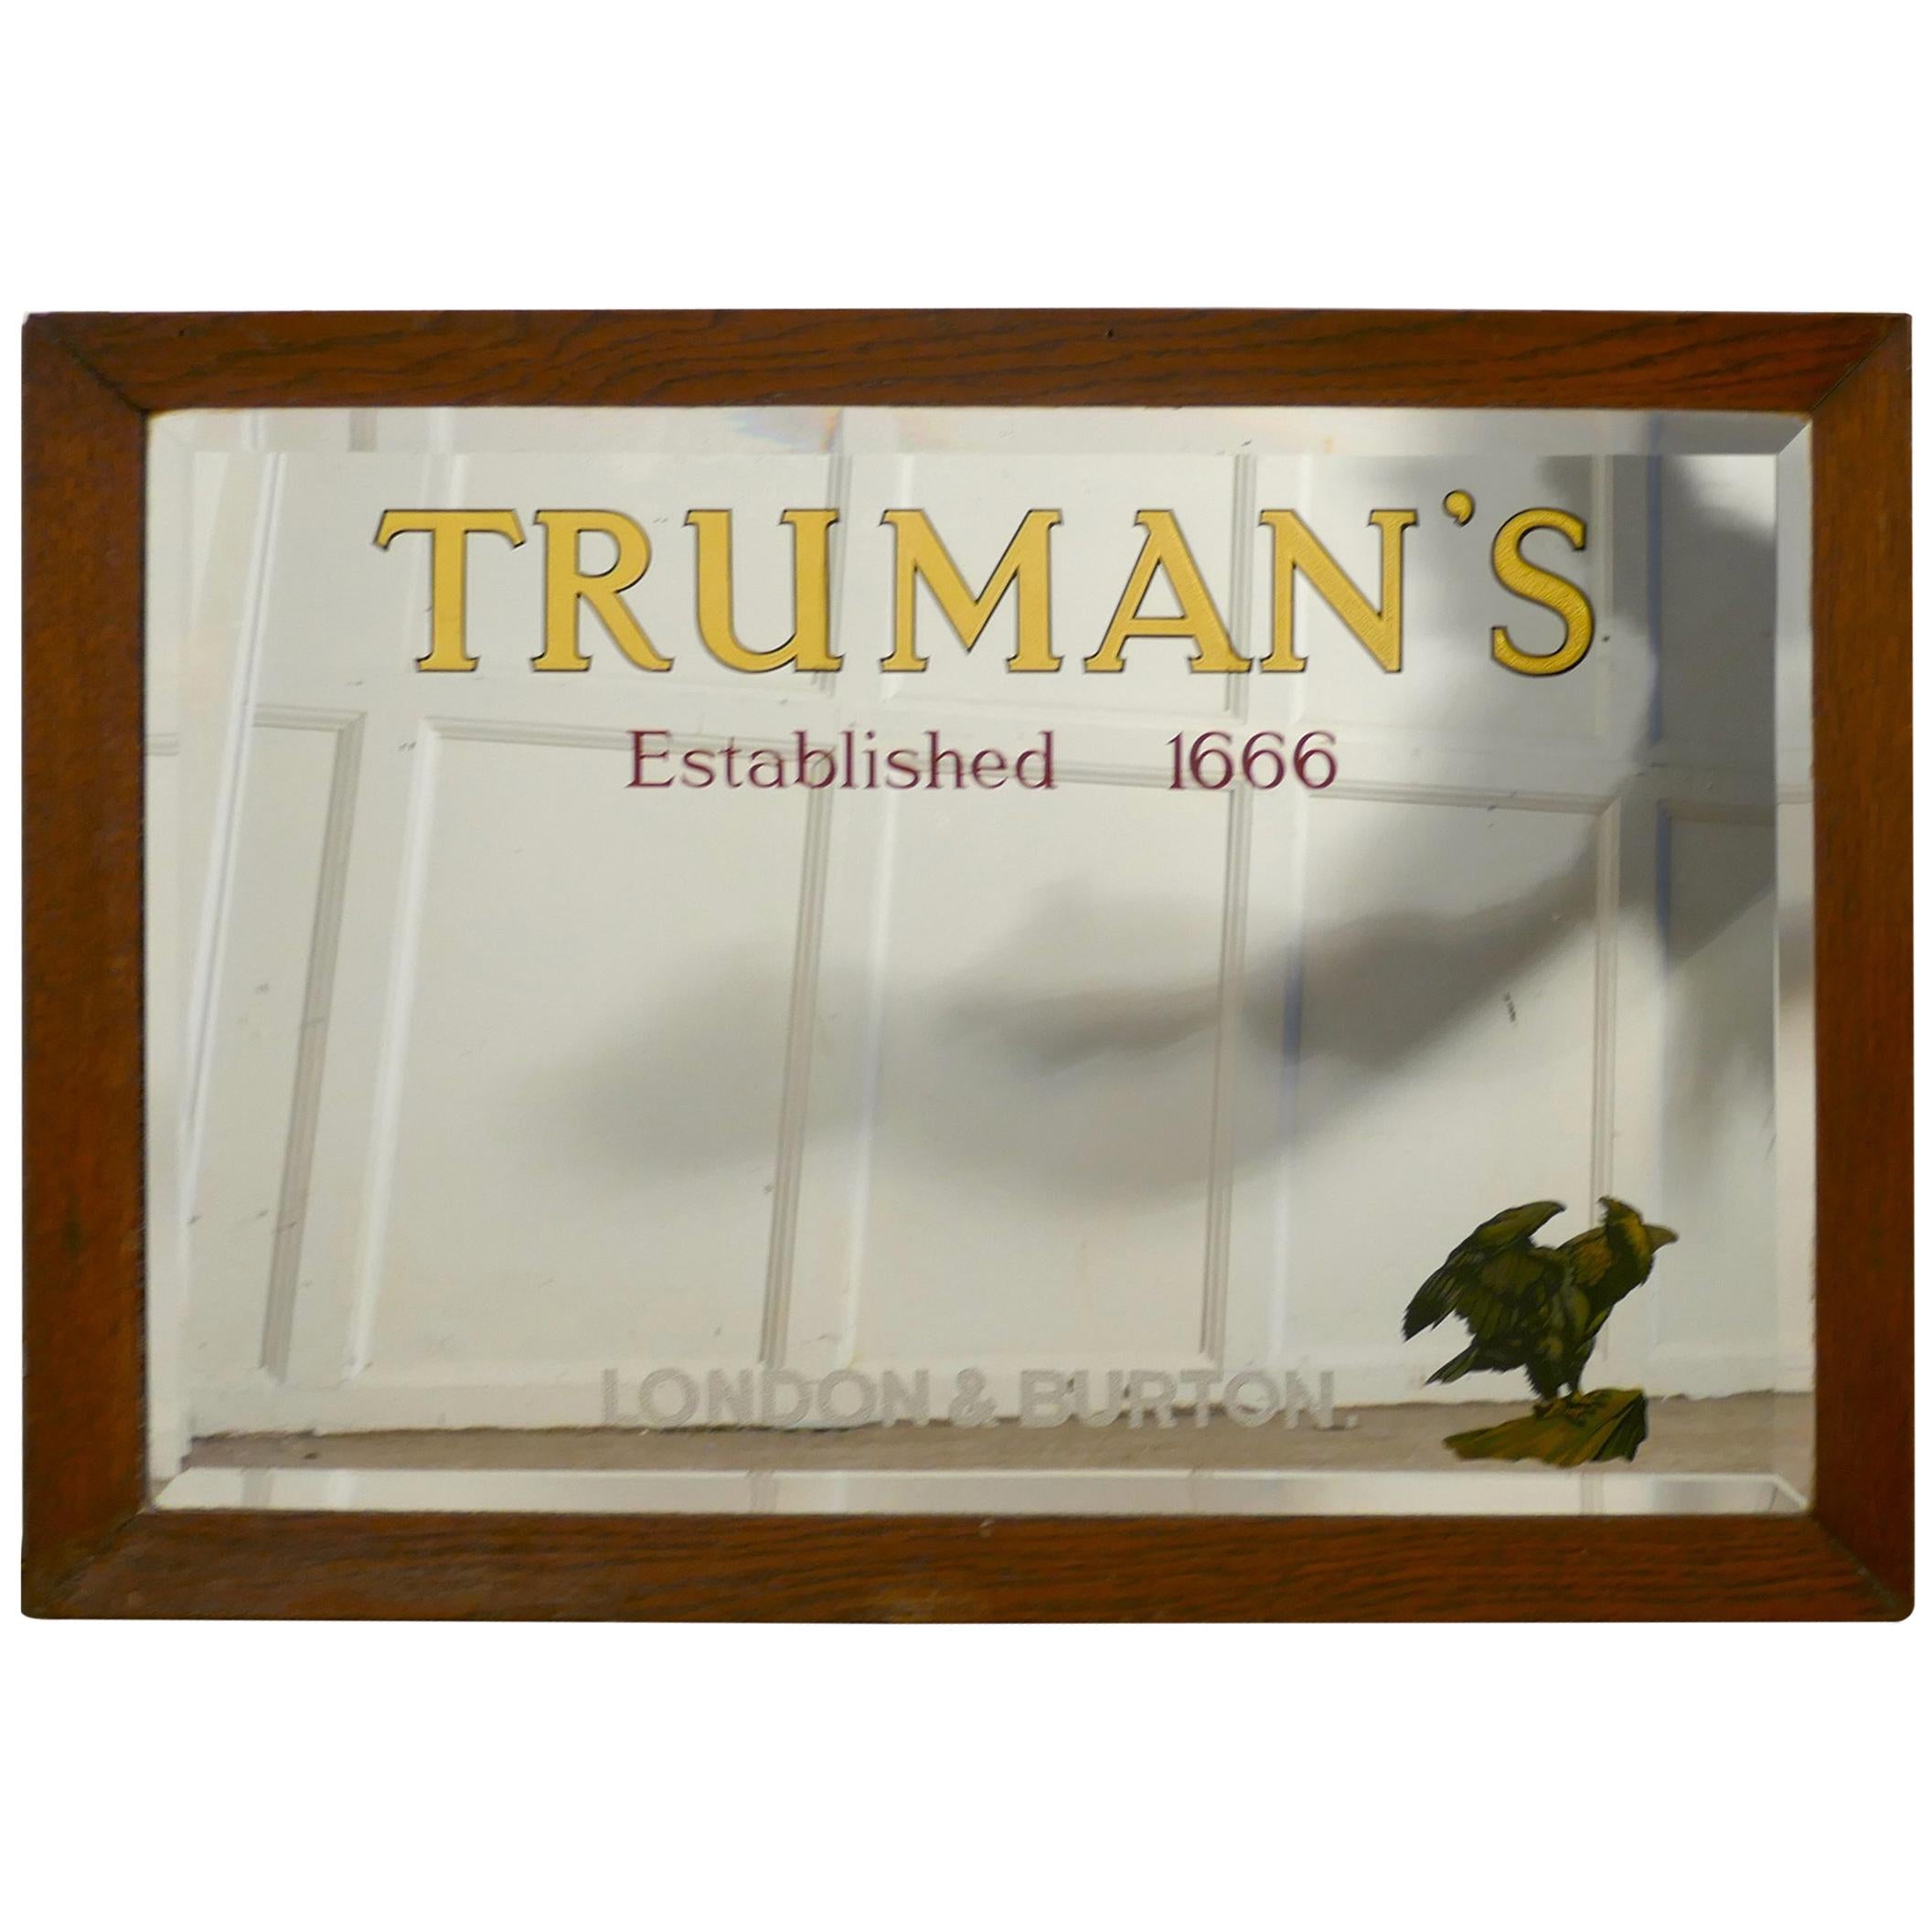 A TRUMAN’s Beer Advertising Mirror, Pub Mirror for Truman’s